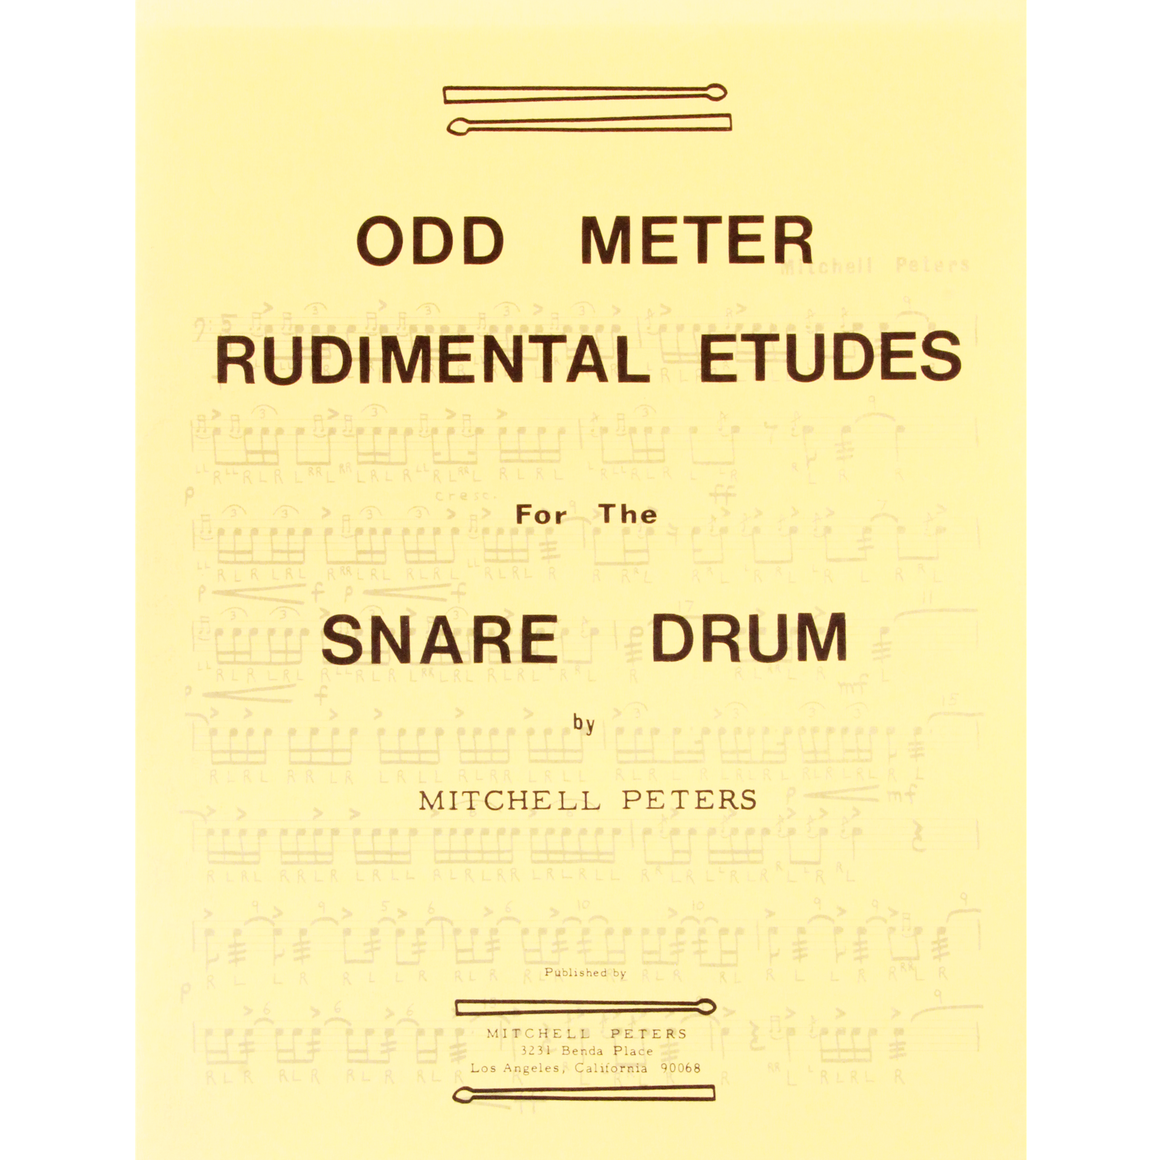 MITCHELL PETERS ODMETRUD Odd Meter Rudimental Etudes Snare Drum